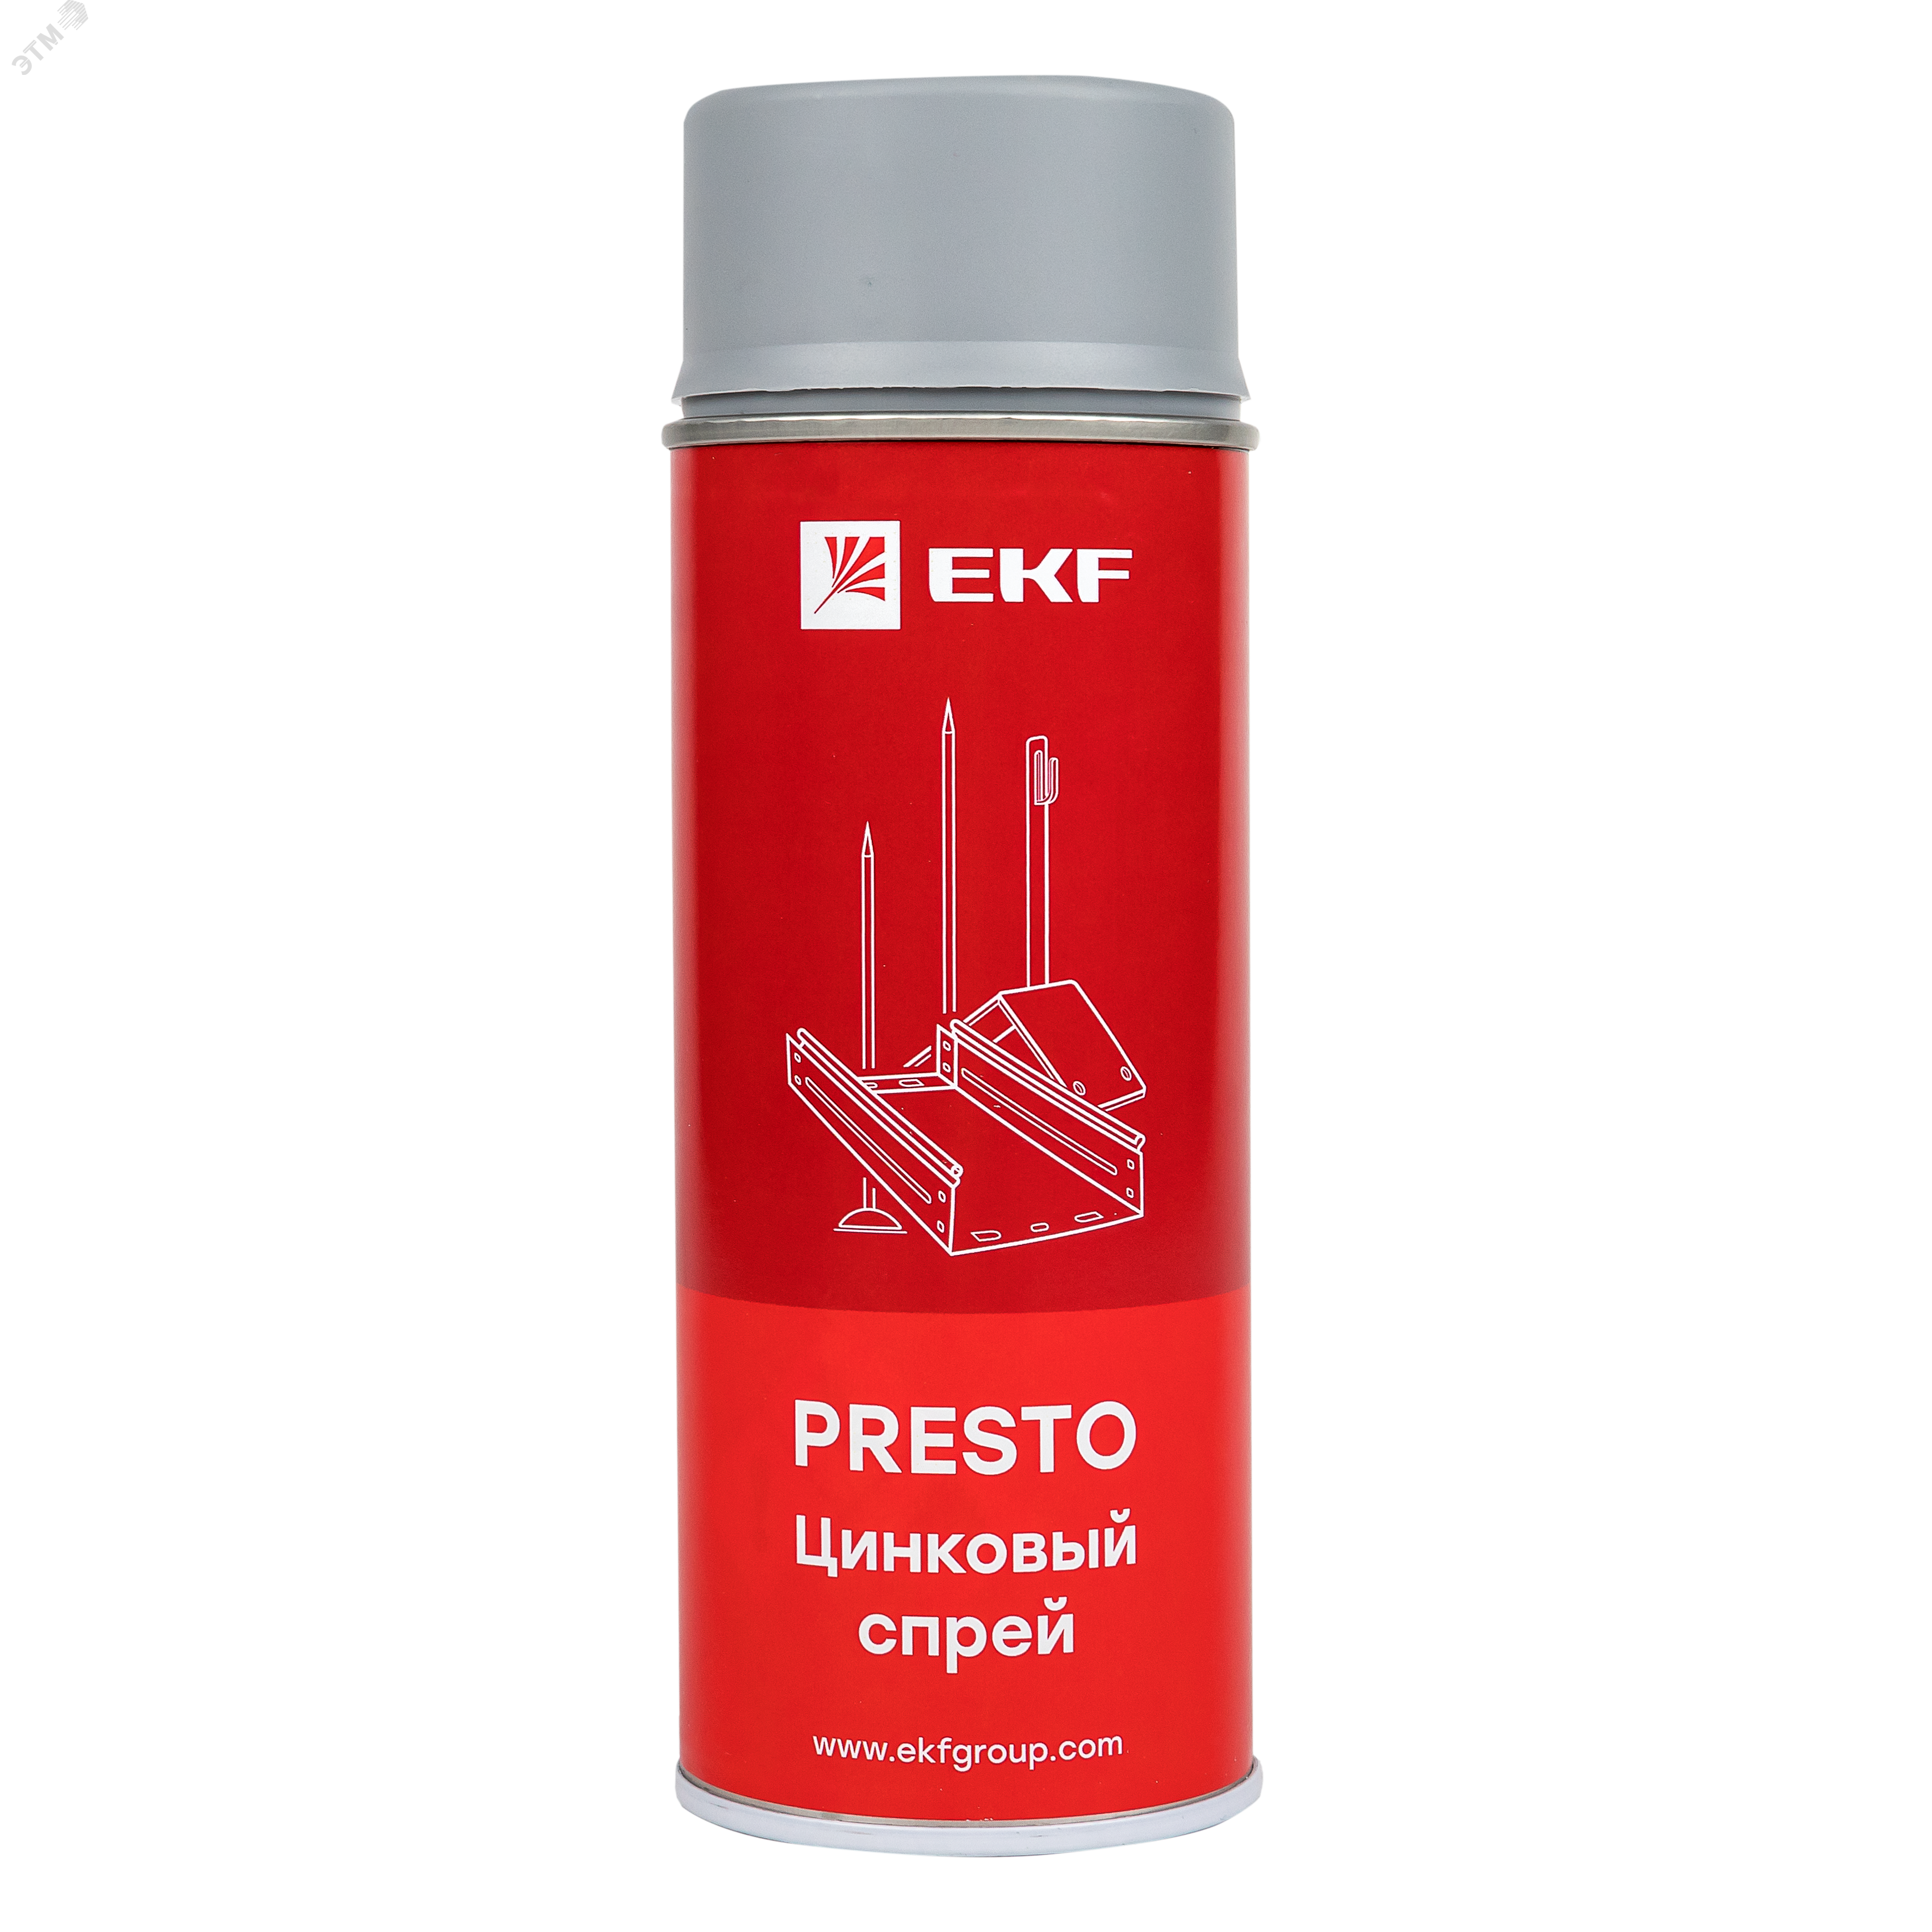 Цинковый спрей Presto 400мл lp-zinc EKF - превью 2